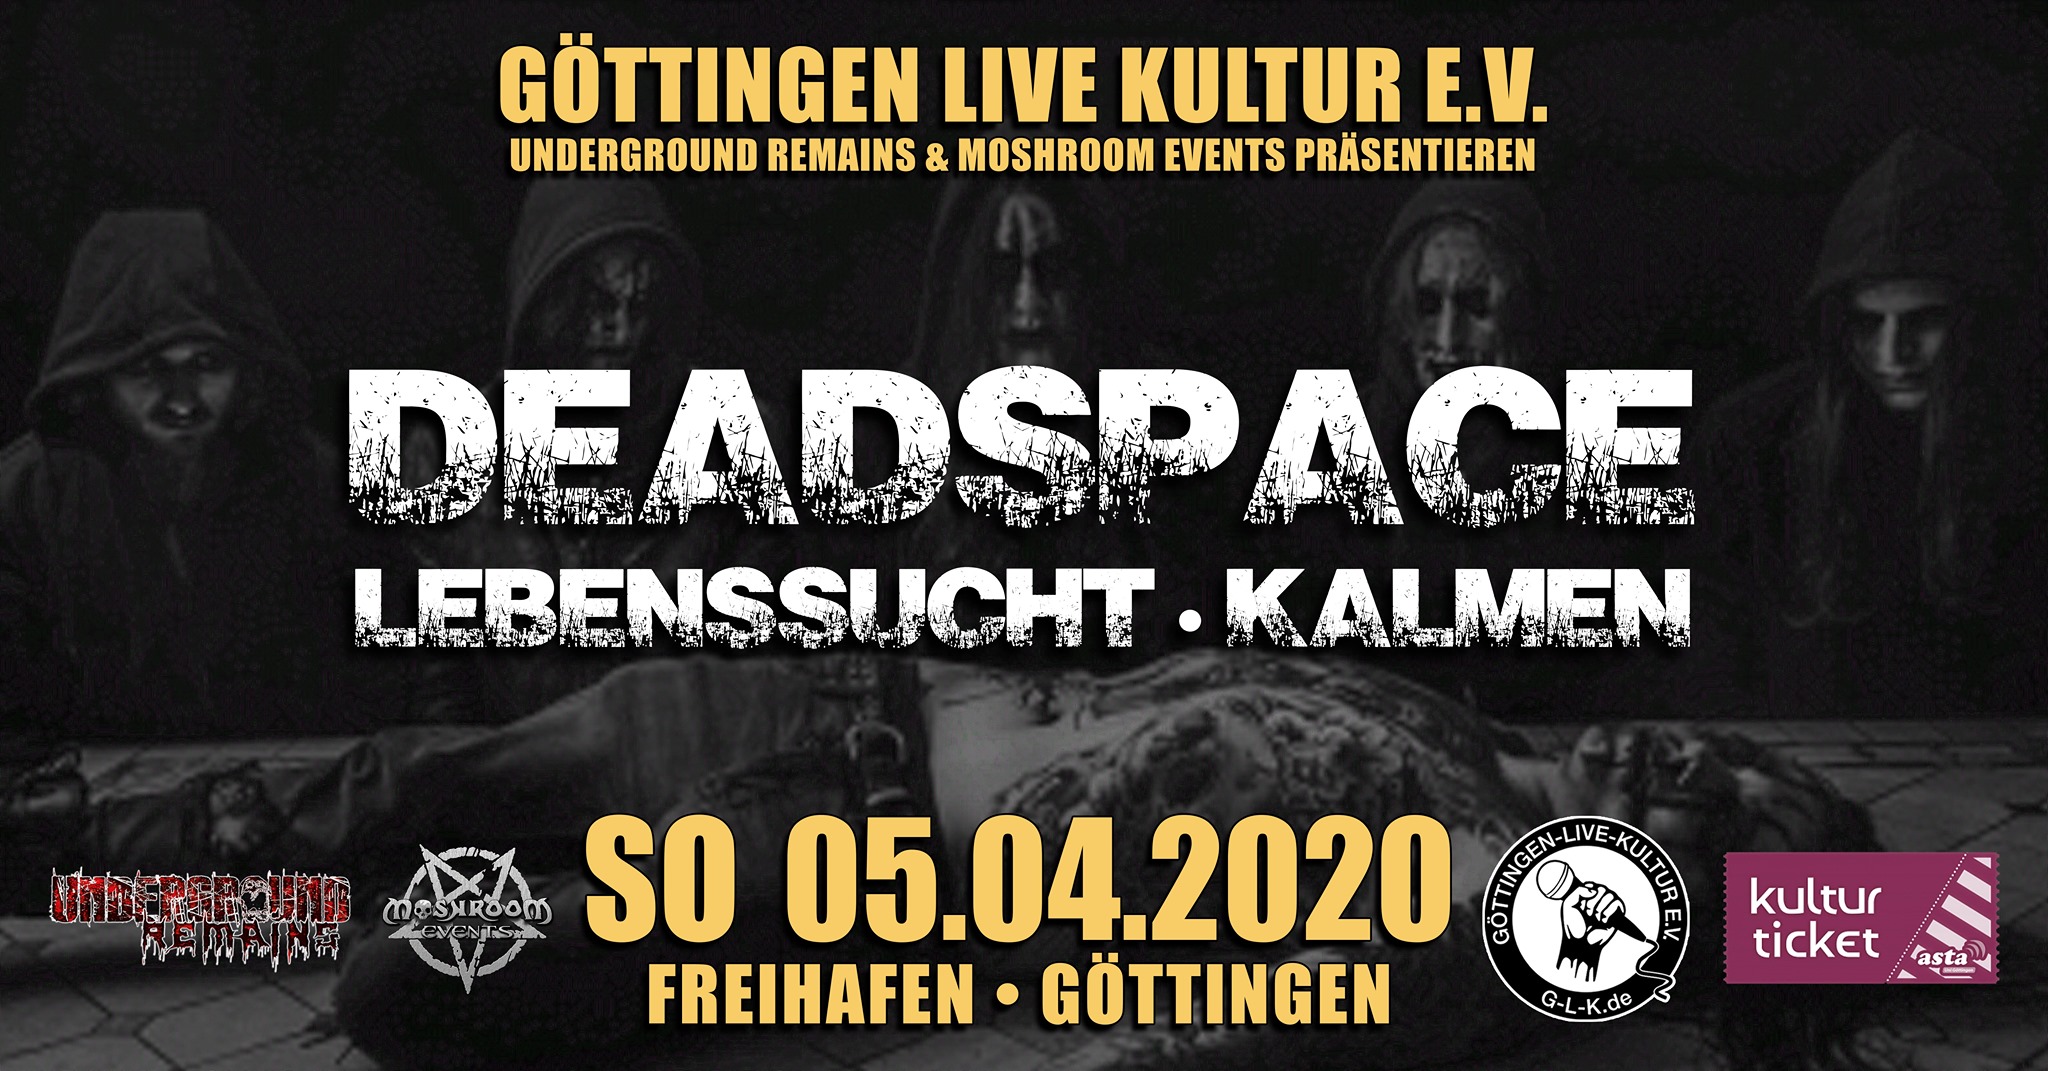 http://www.g-l-k.de/backend/img/concert/concert2020-04-05.png